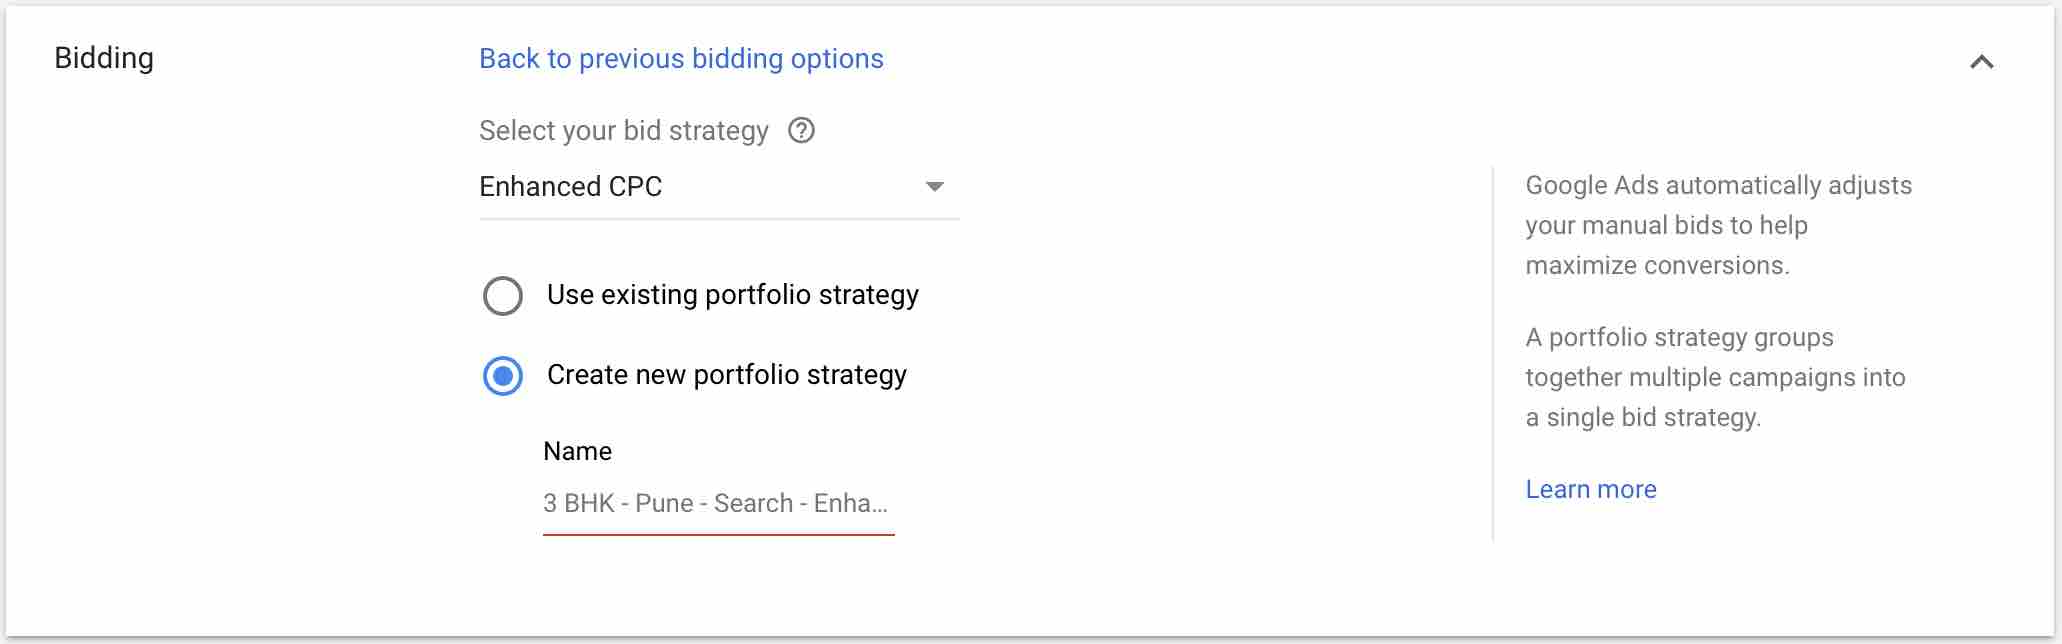 Google Ads ECPC Bidding Strategy